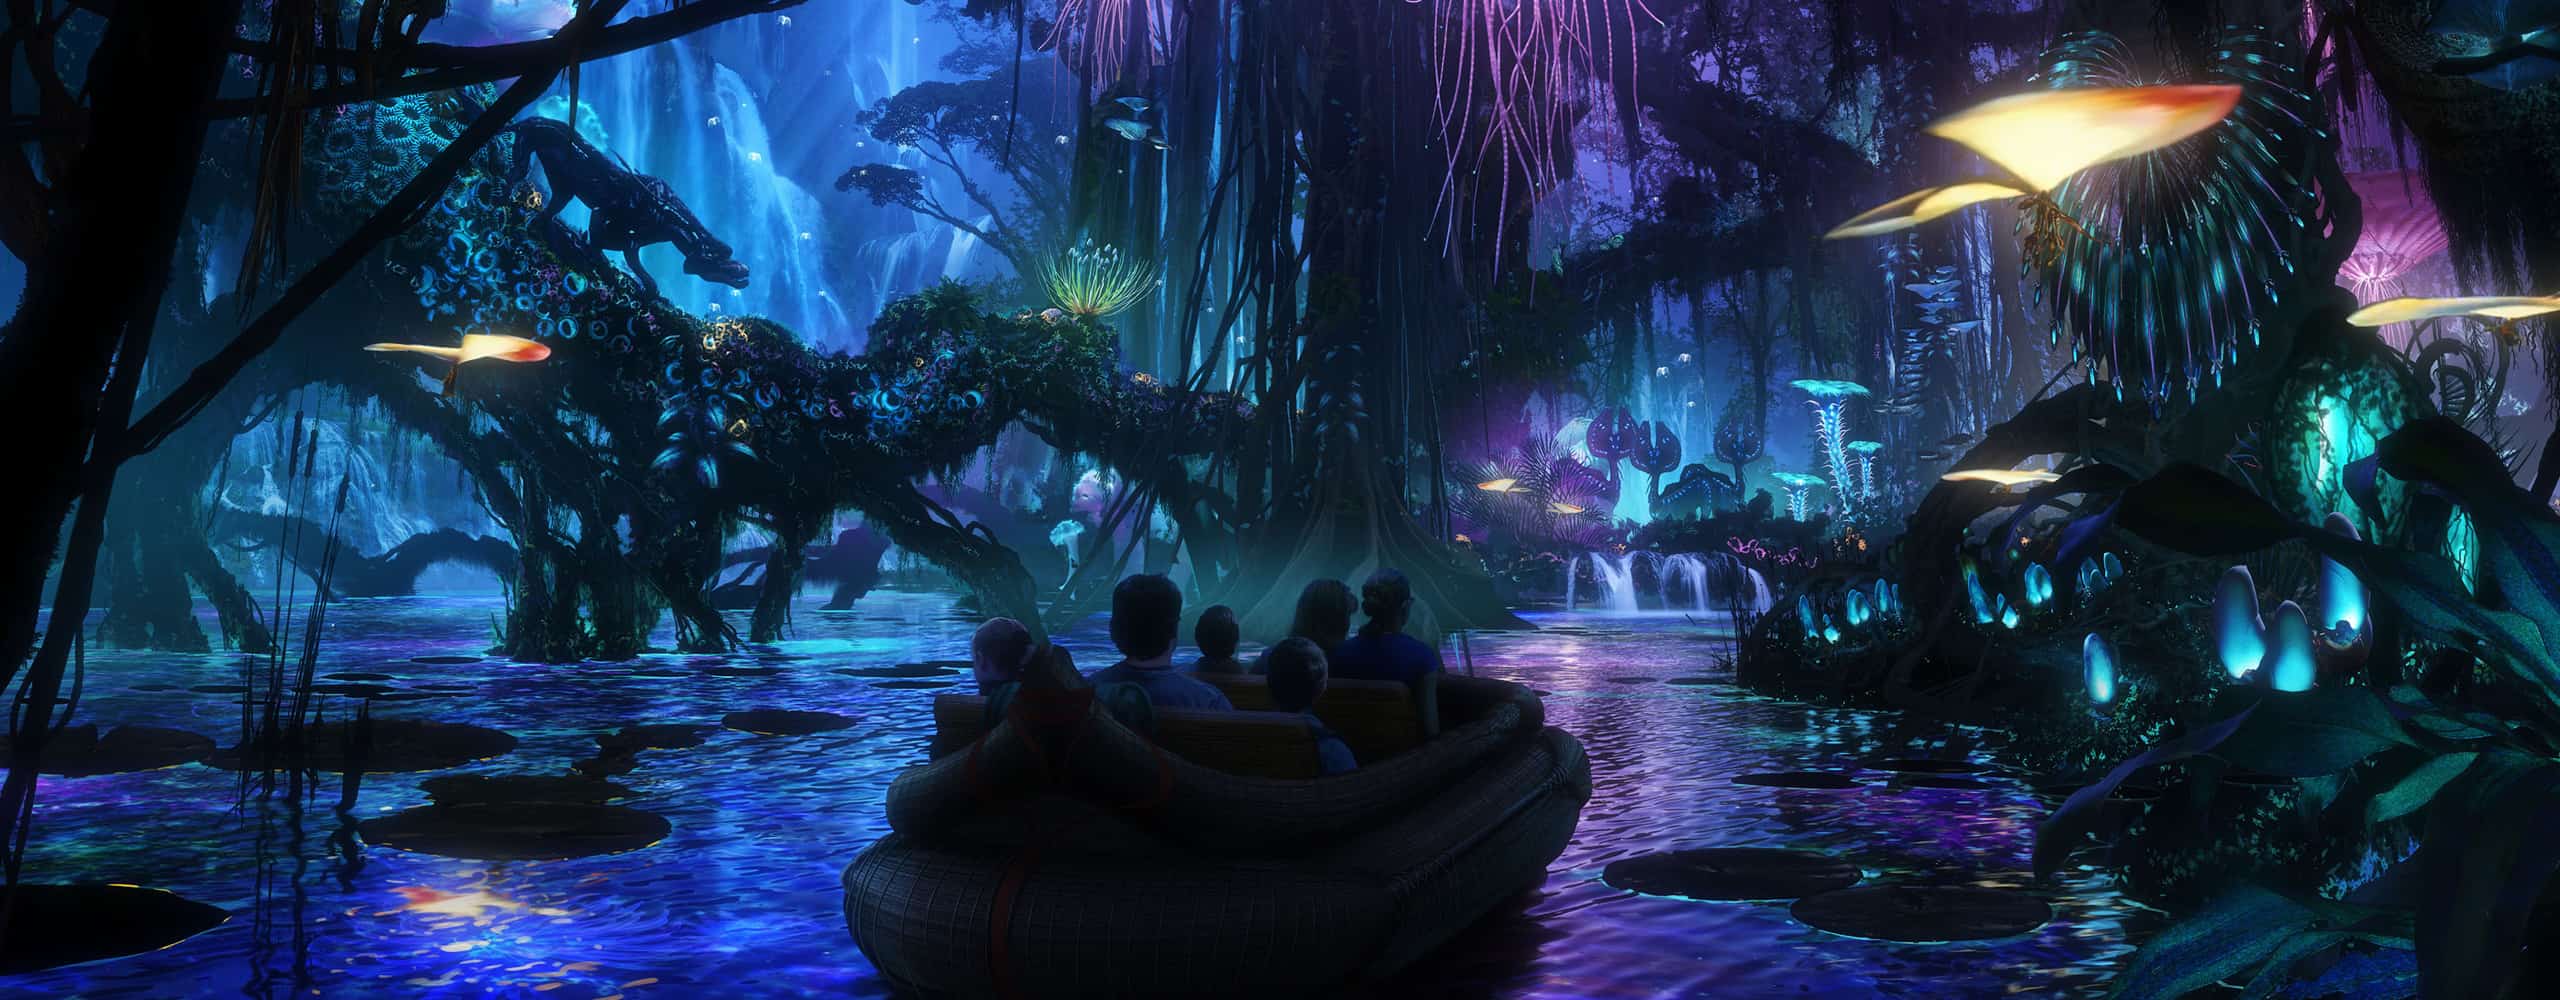 World Of Avatar, Disney's Animal Kingdom